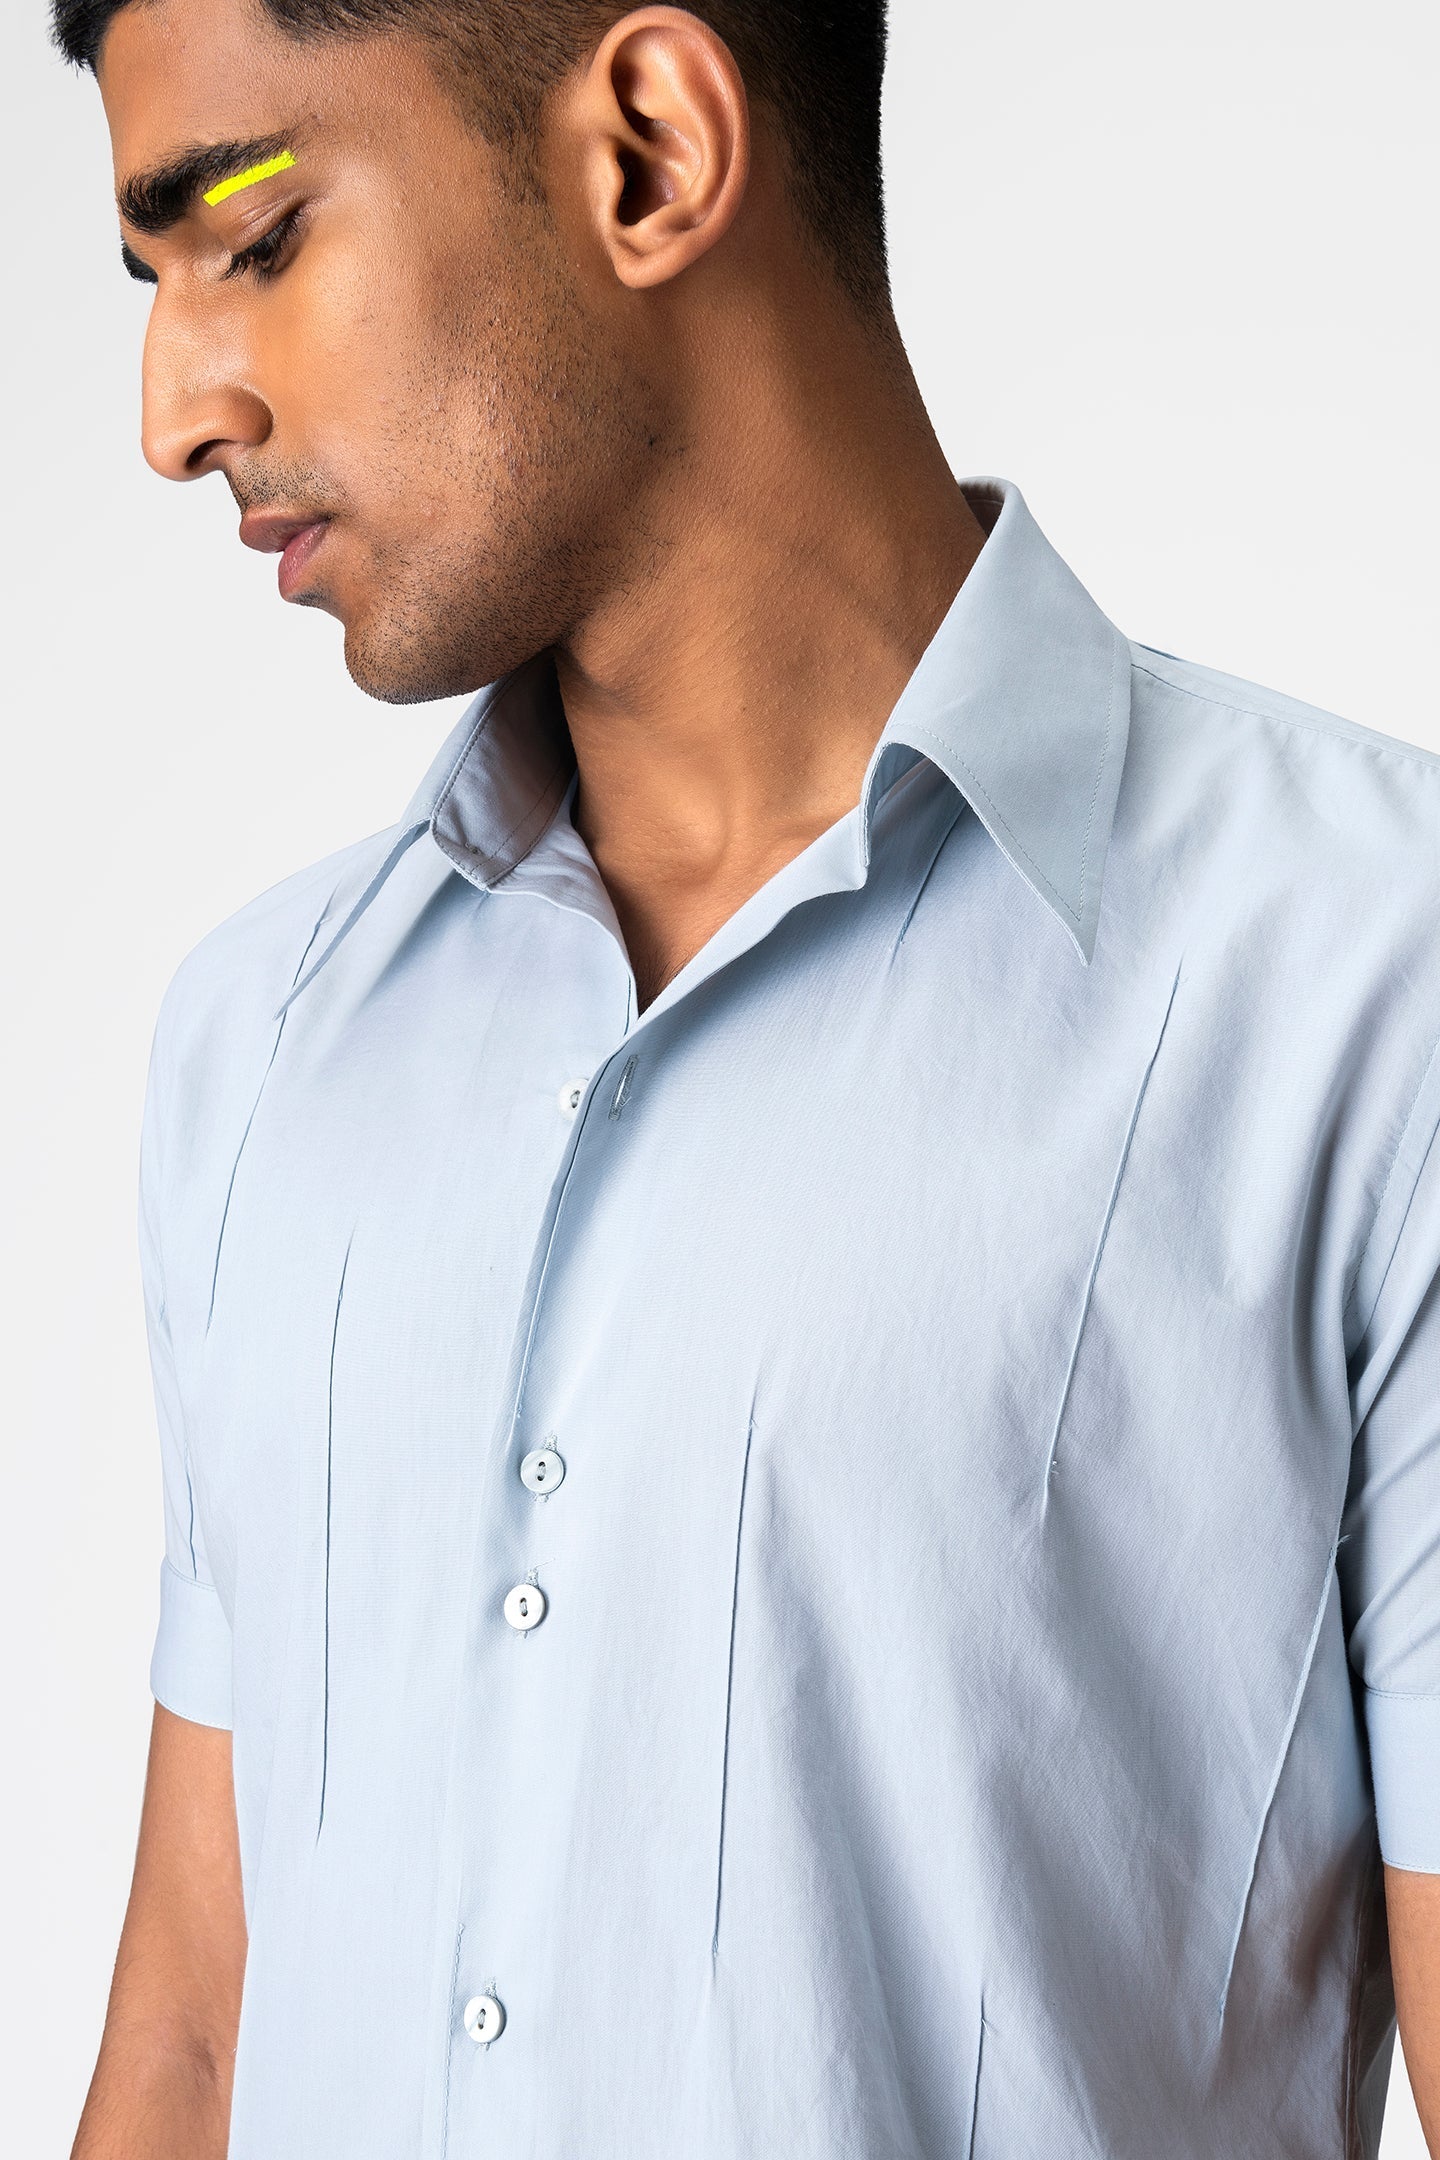 cotton-half-sleeved-shirt - Genes online store 2020